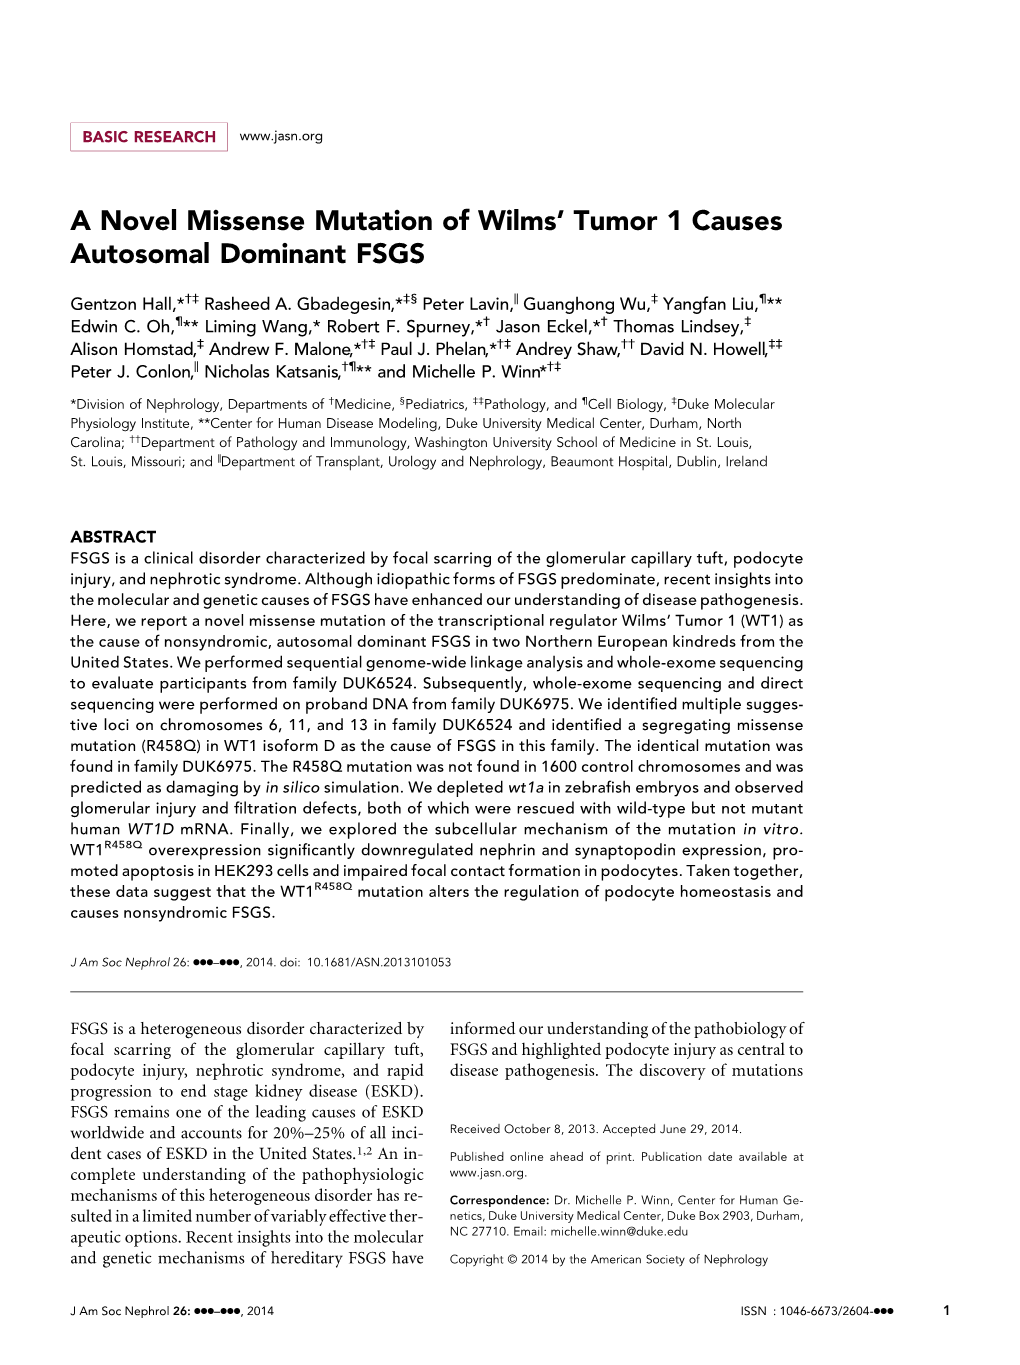 A Novel Missense Mutation of Wilms' Tumor 1 Causes Autosomal